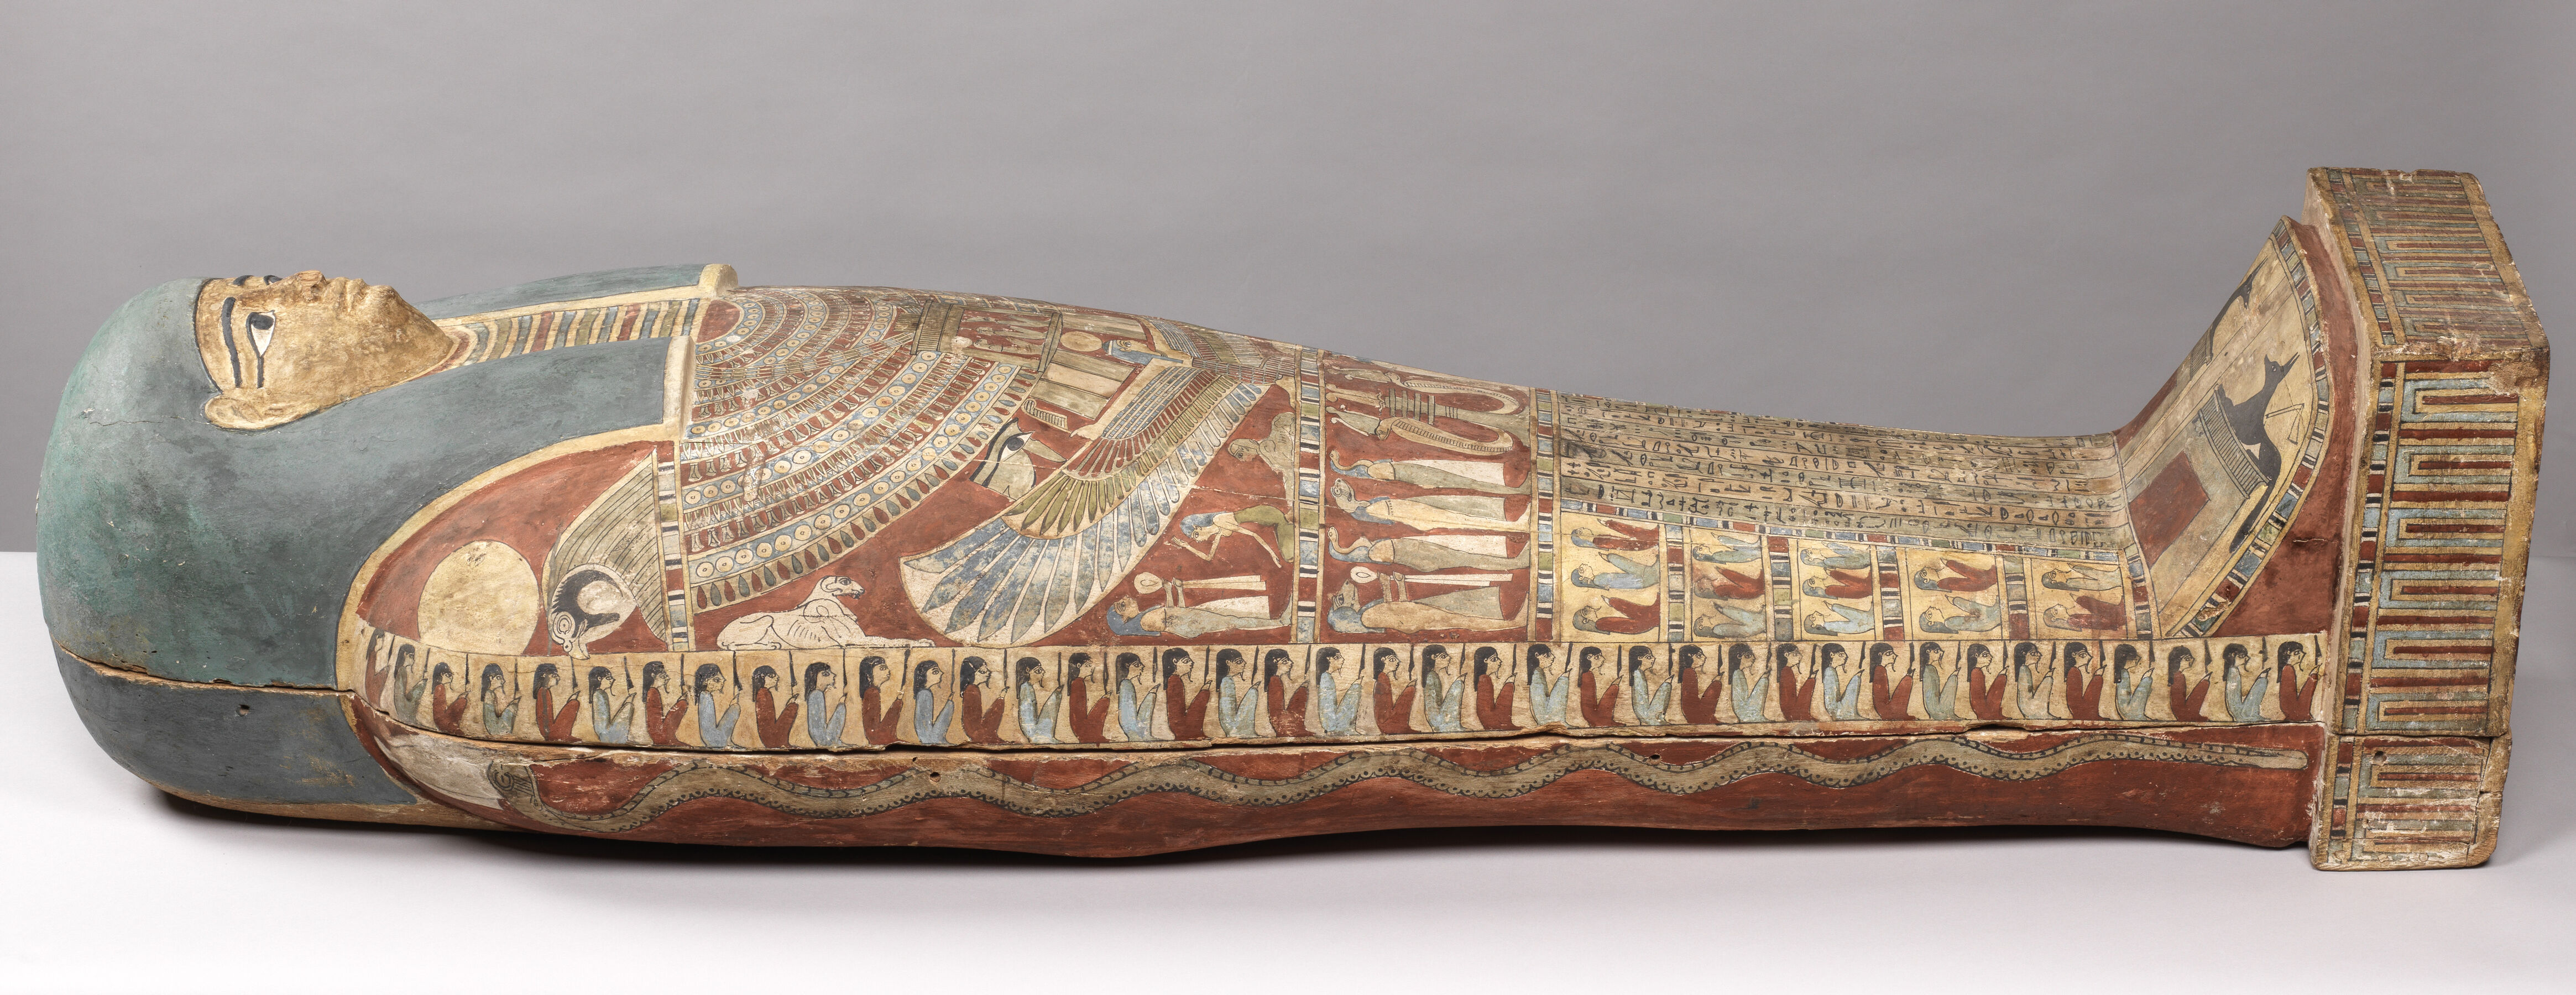 Sarcophagus Fragment of Nefertiti?